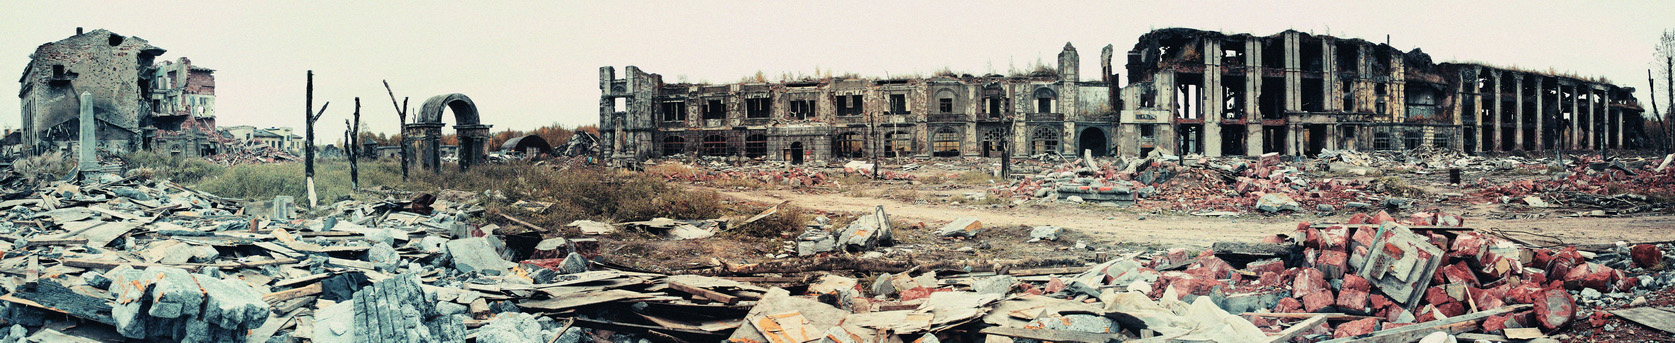 photo "мрачная панорама" tags: panoramic, misc., city, апокалипсис, разруха, руины